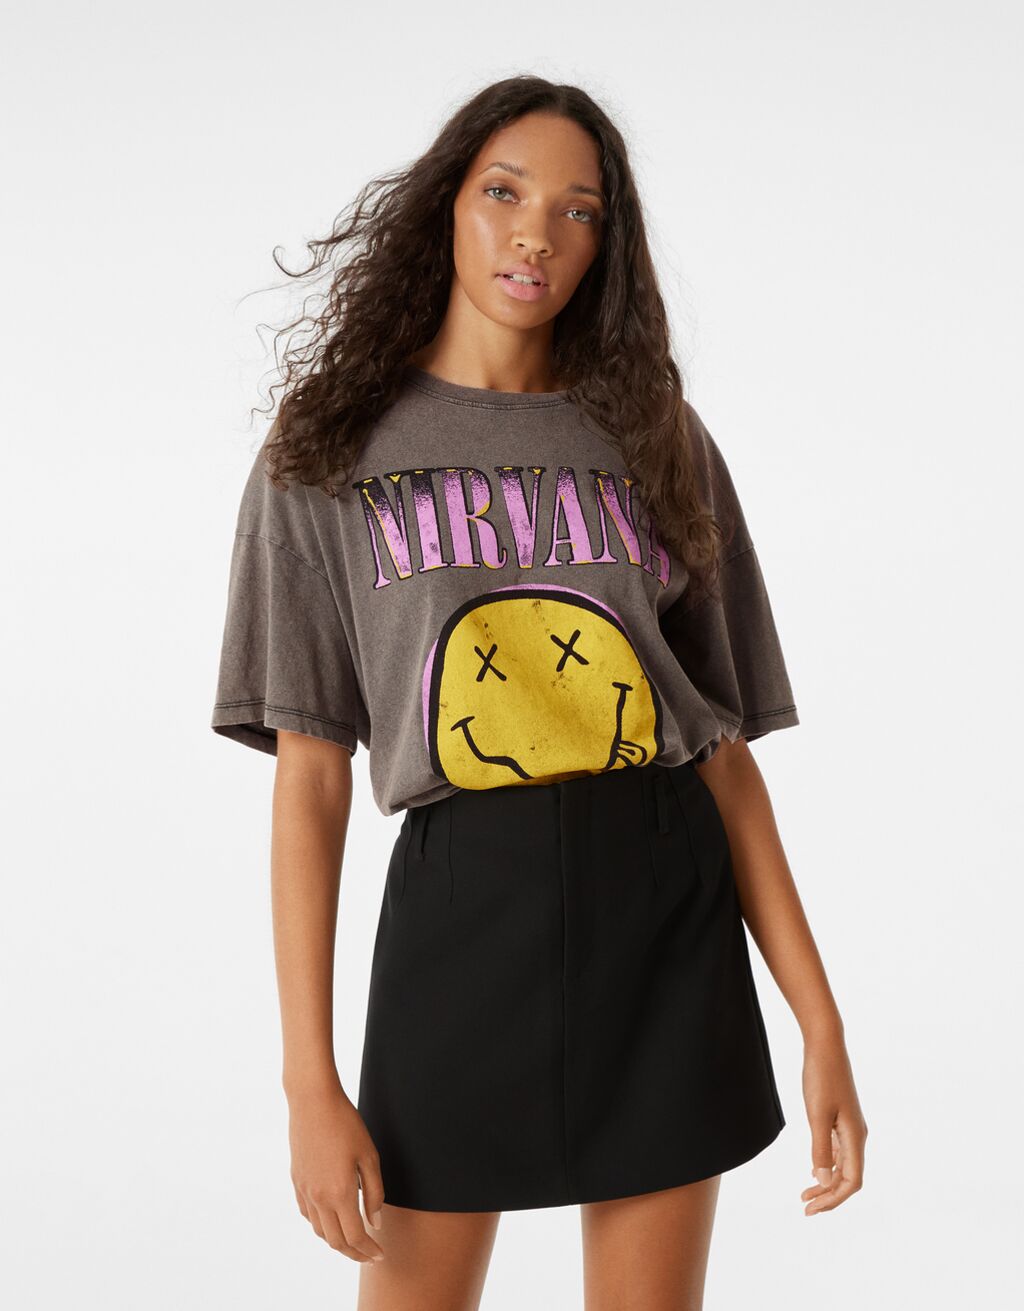 T-Shirt mit Print Nirvana